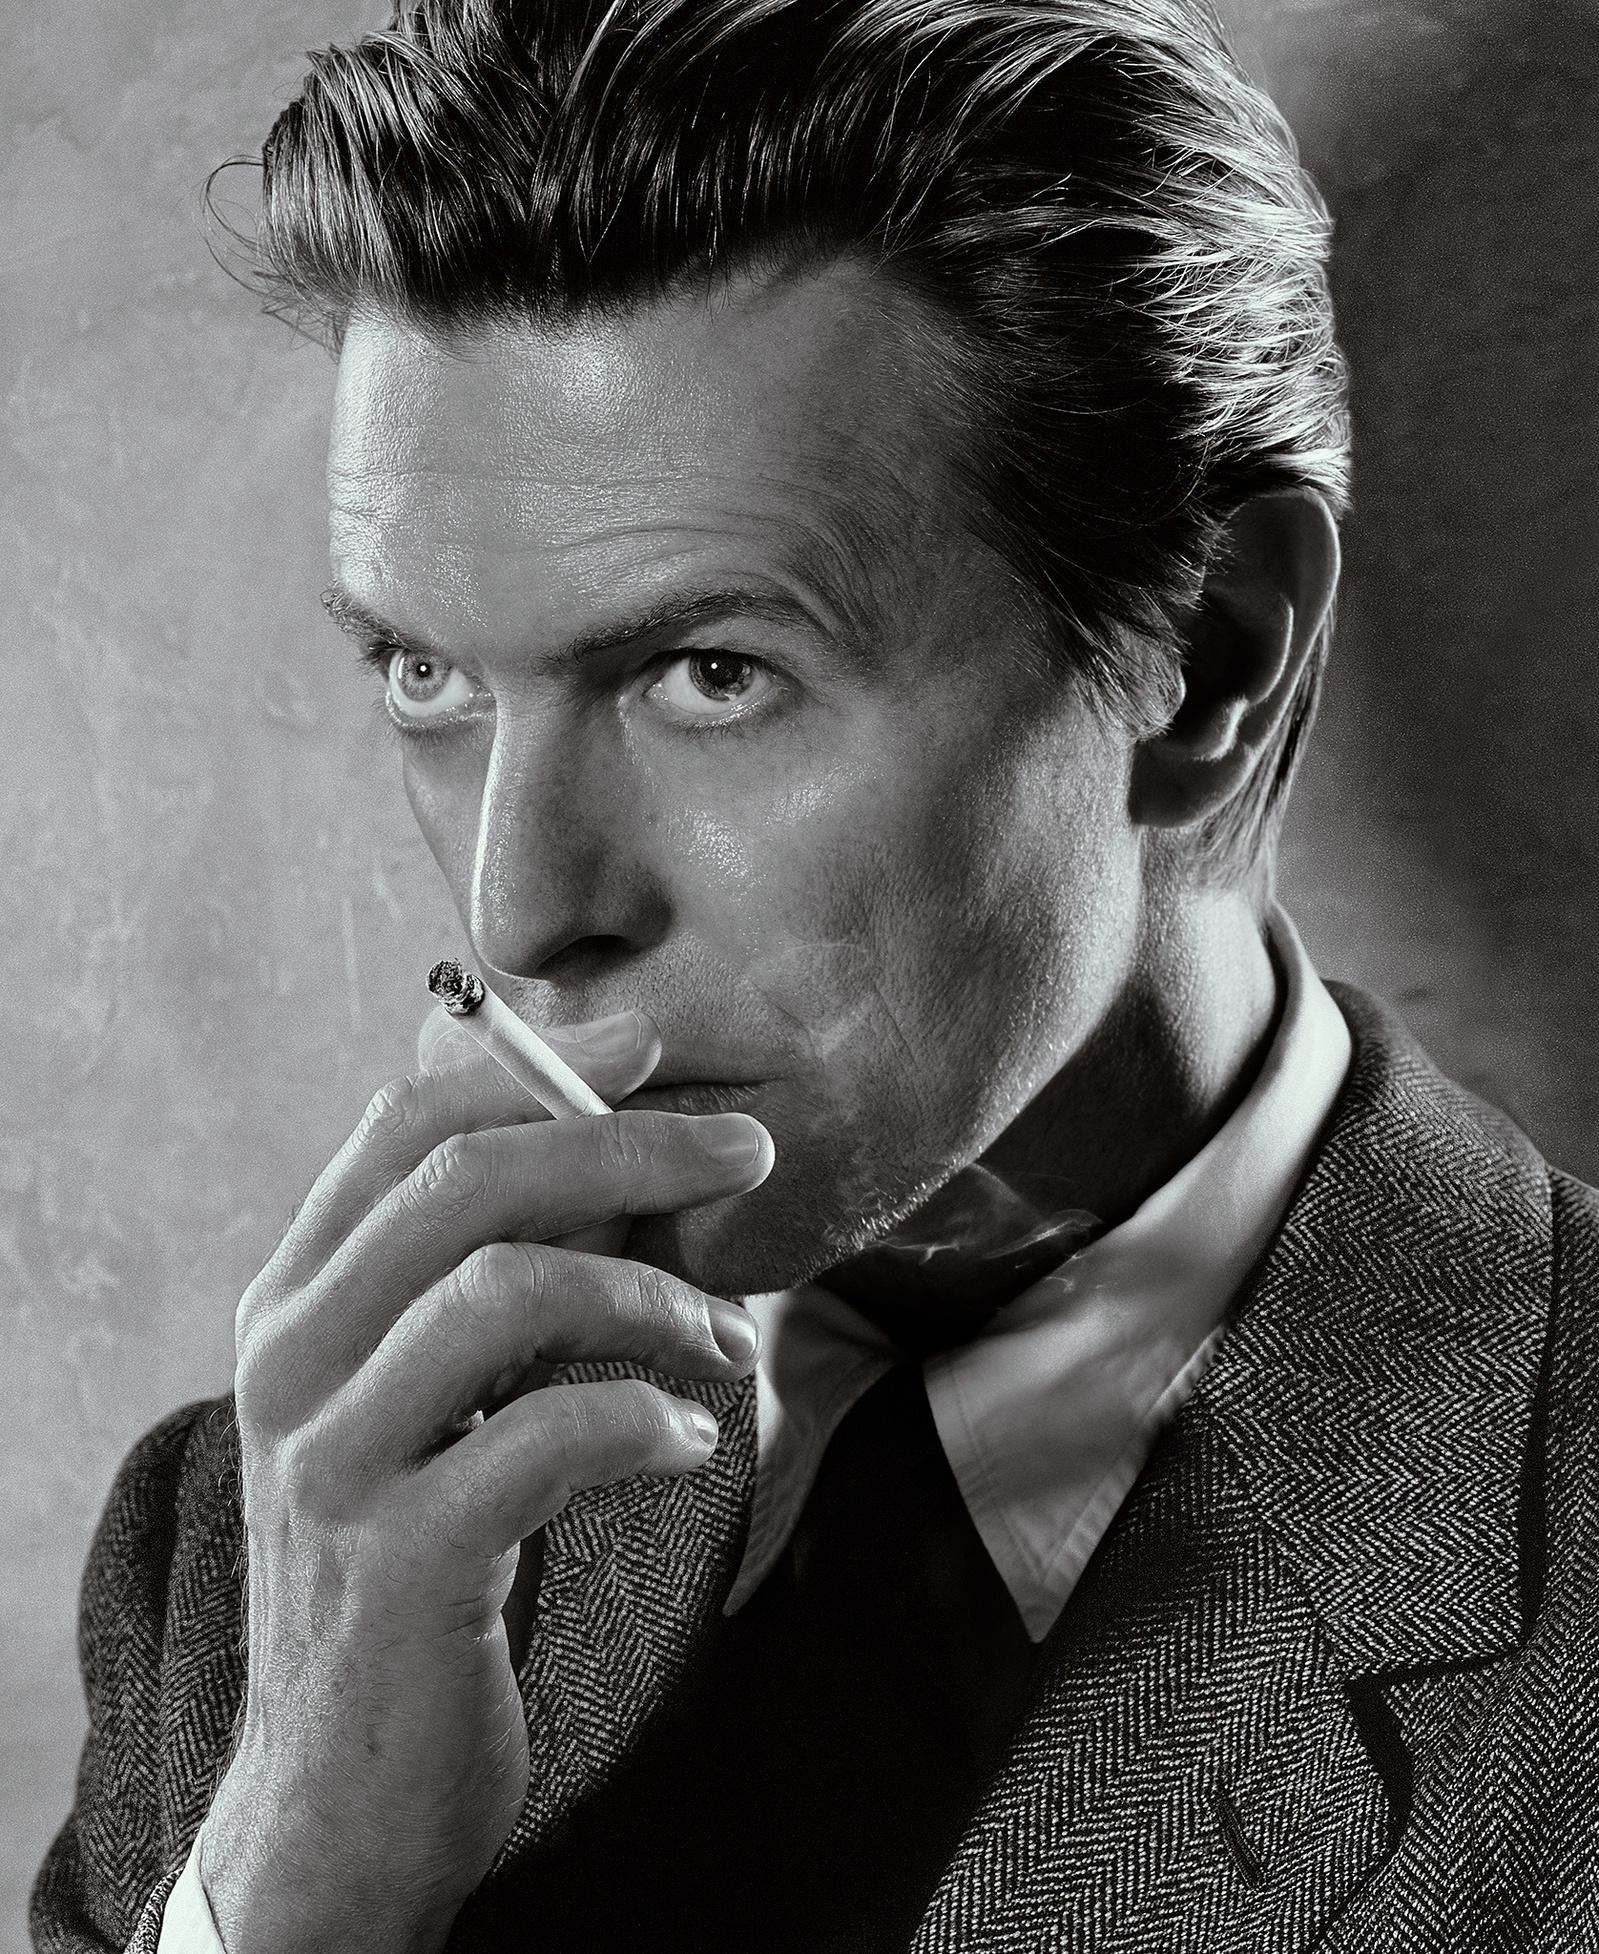 David Bowie, Smoking, Black & White - Photograph by Markus Klinko